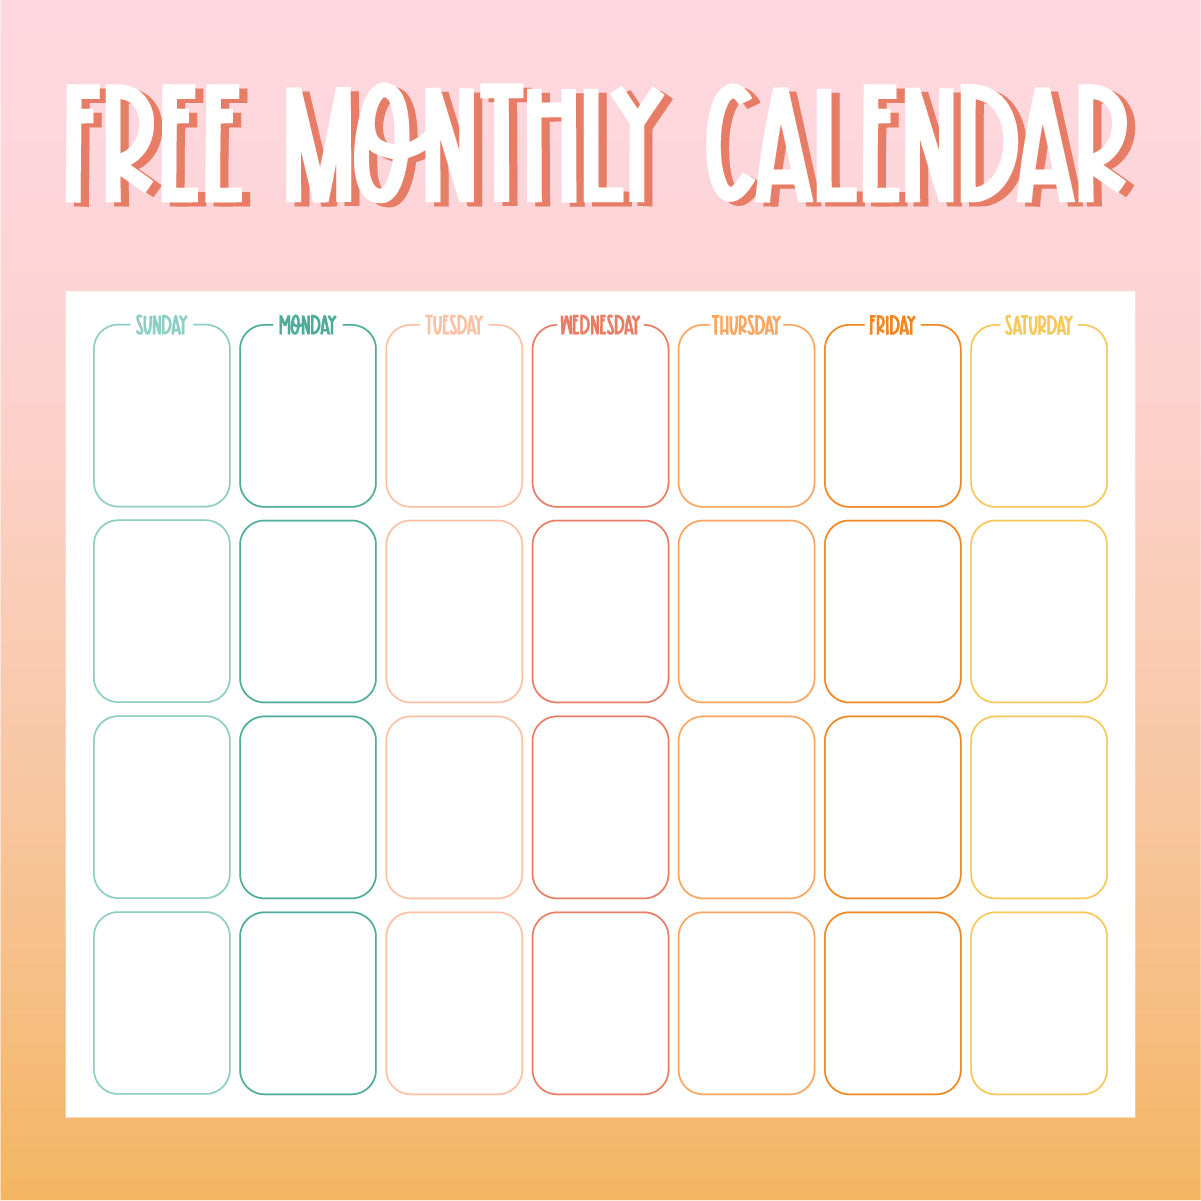 Free Monthly Calendar